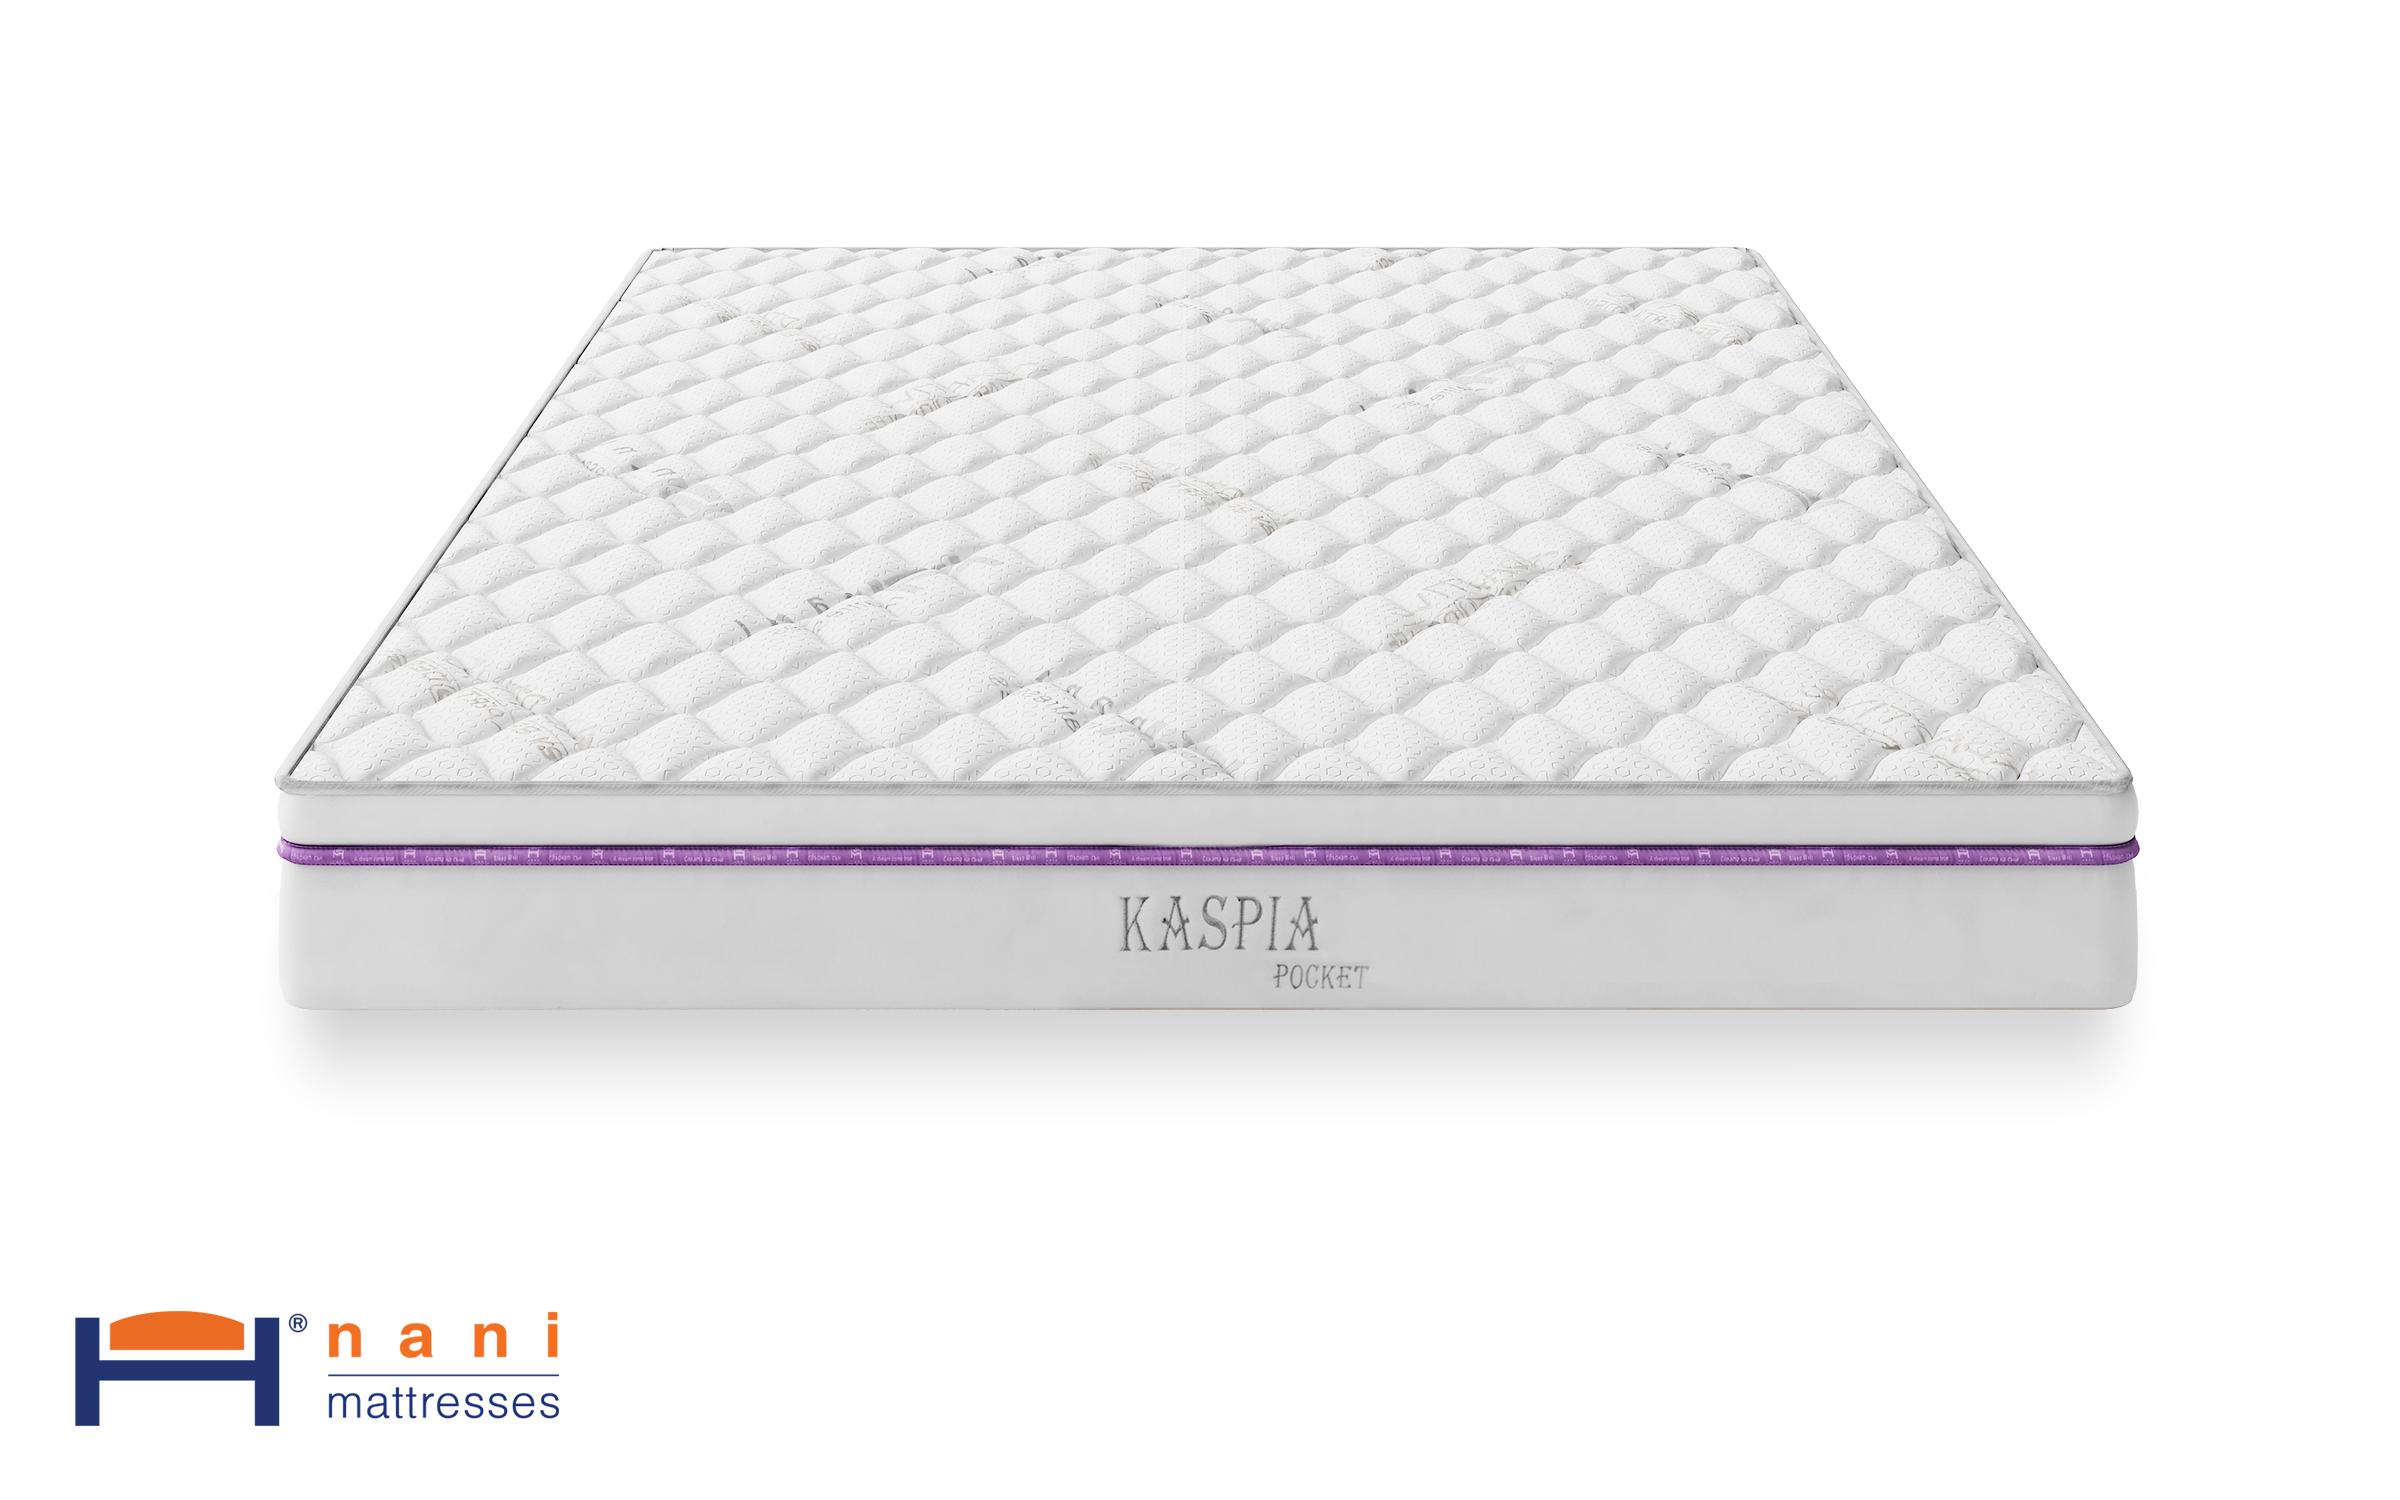 Egyoldalas matrac Kaspia Pocket 160/200,   2